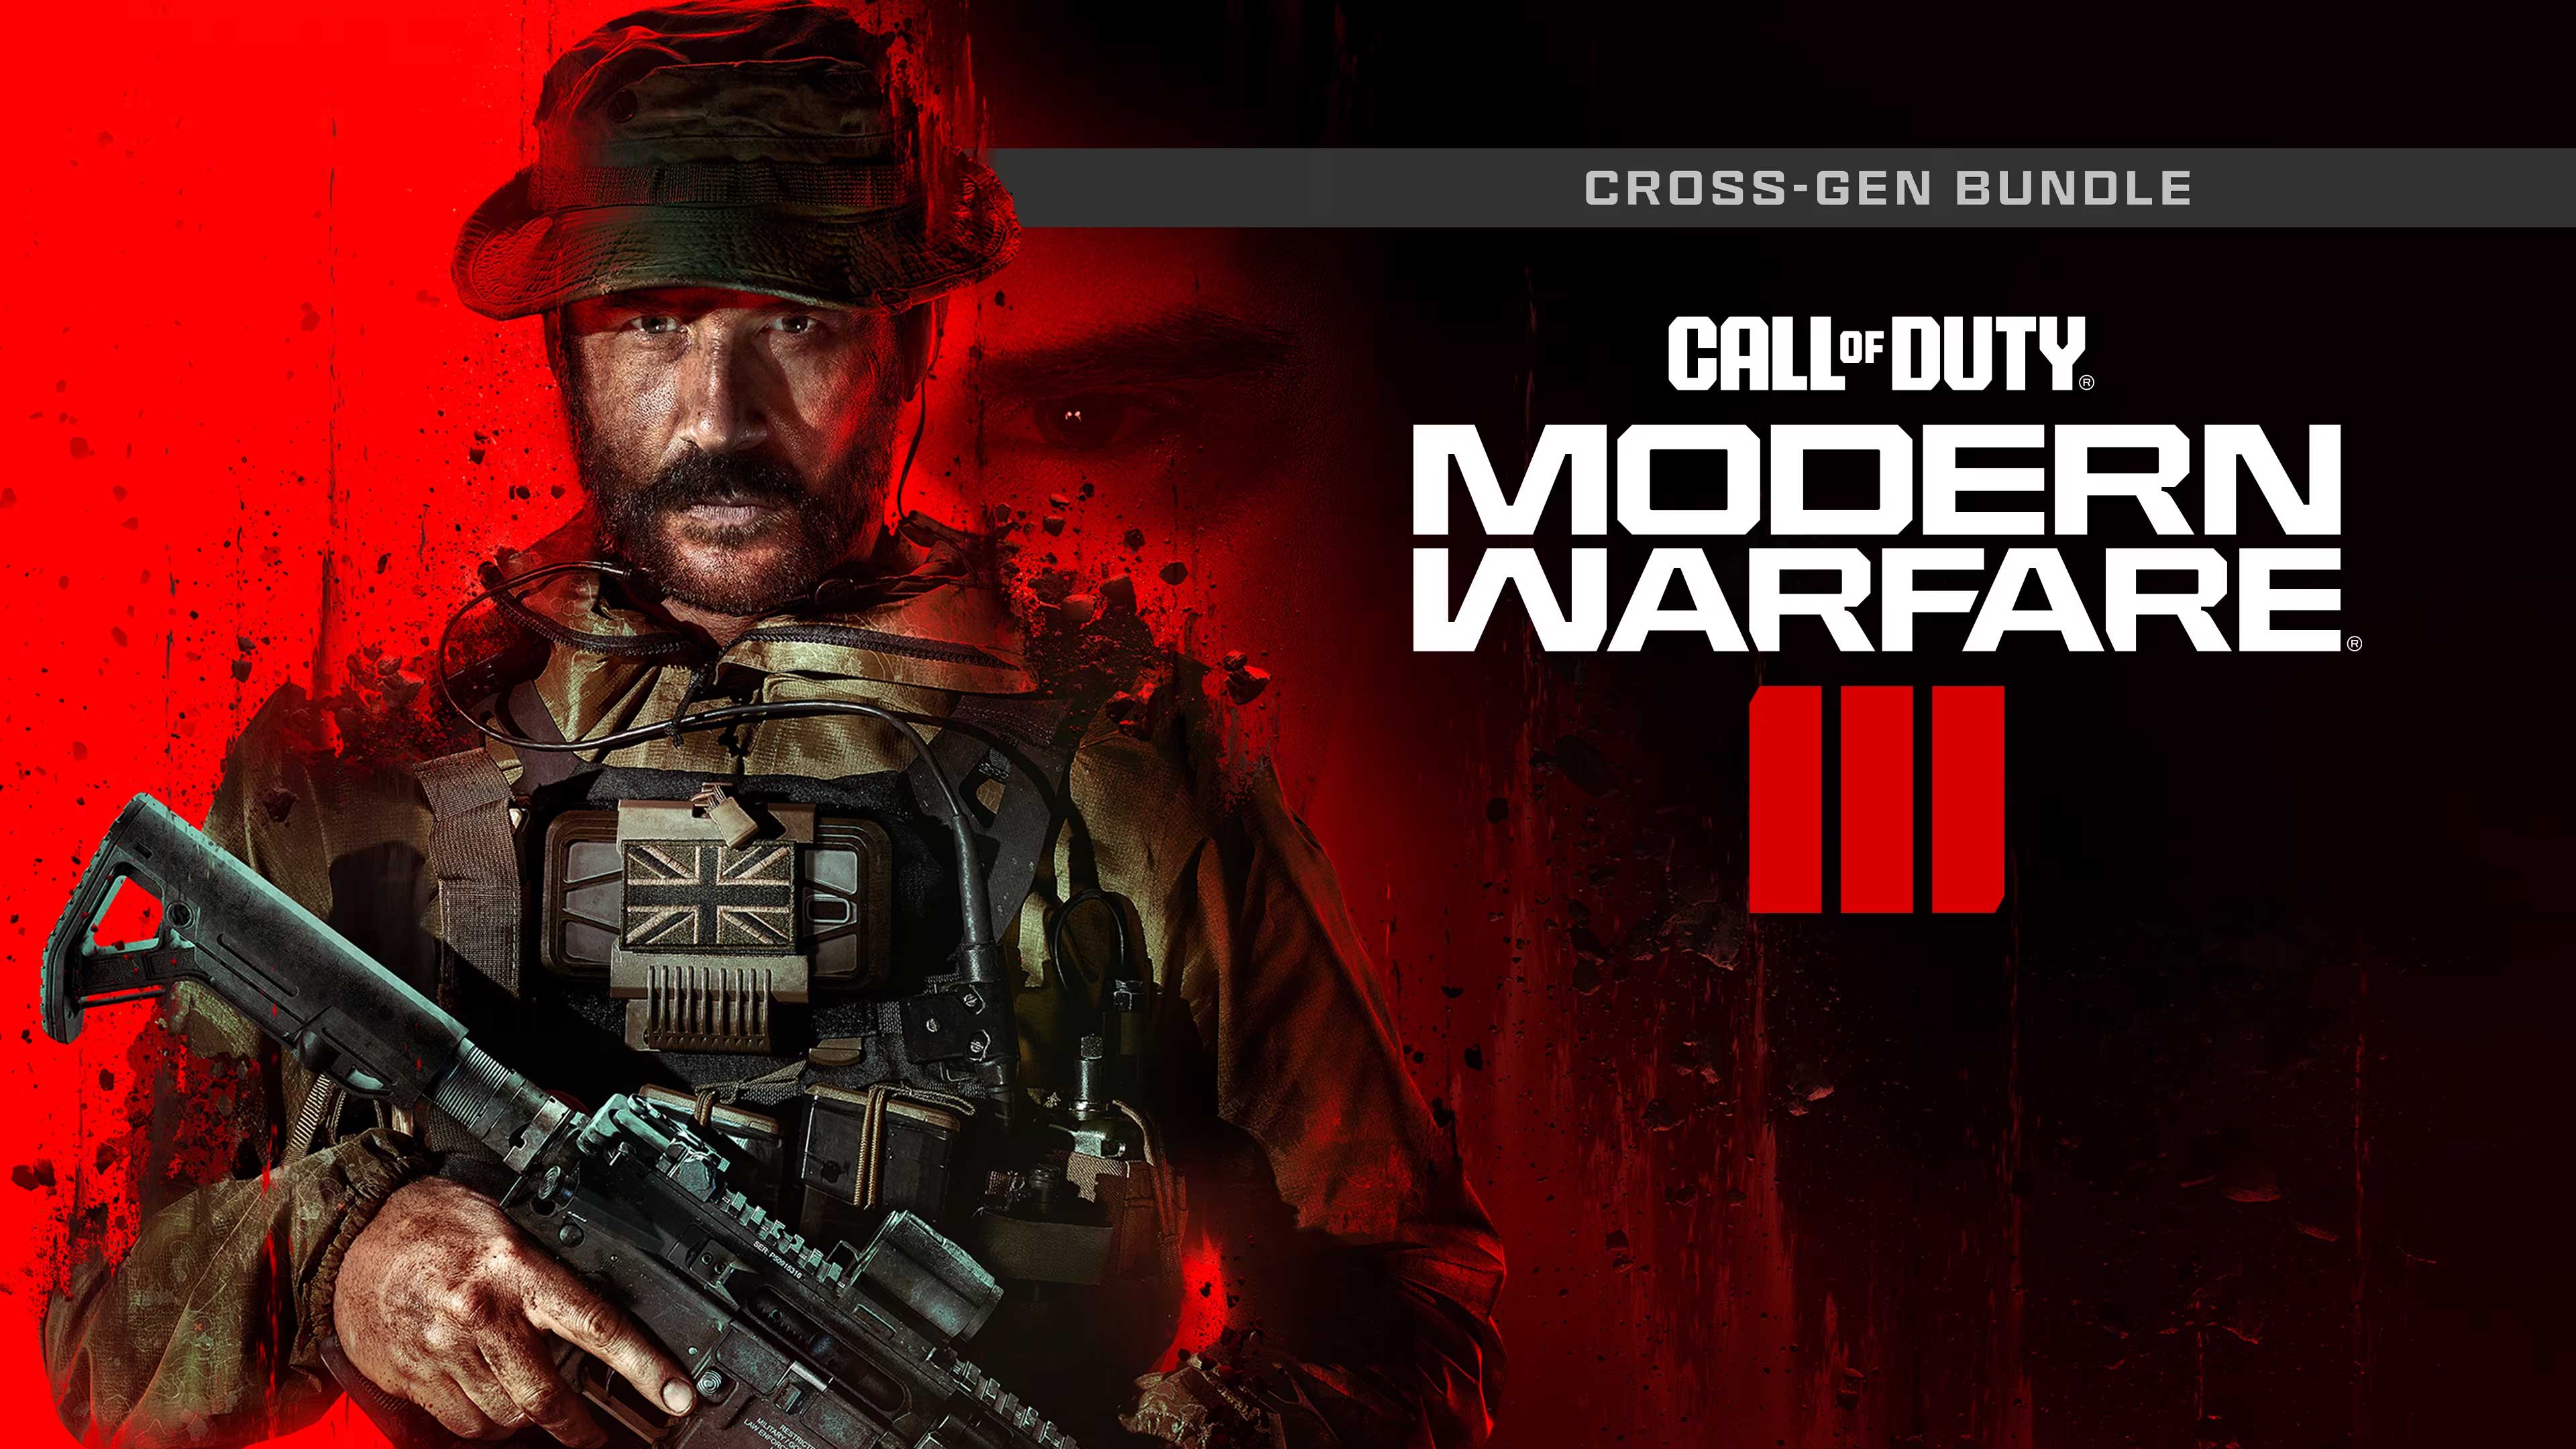 Call of Duty: Modern Warfare III - Cross-Gen Bundle, The Gamenator, thegamenator.com